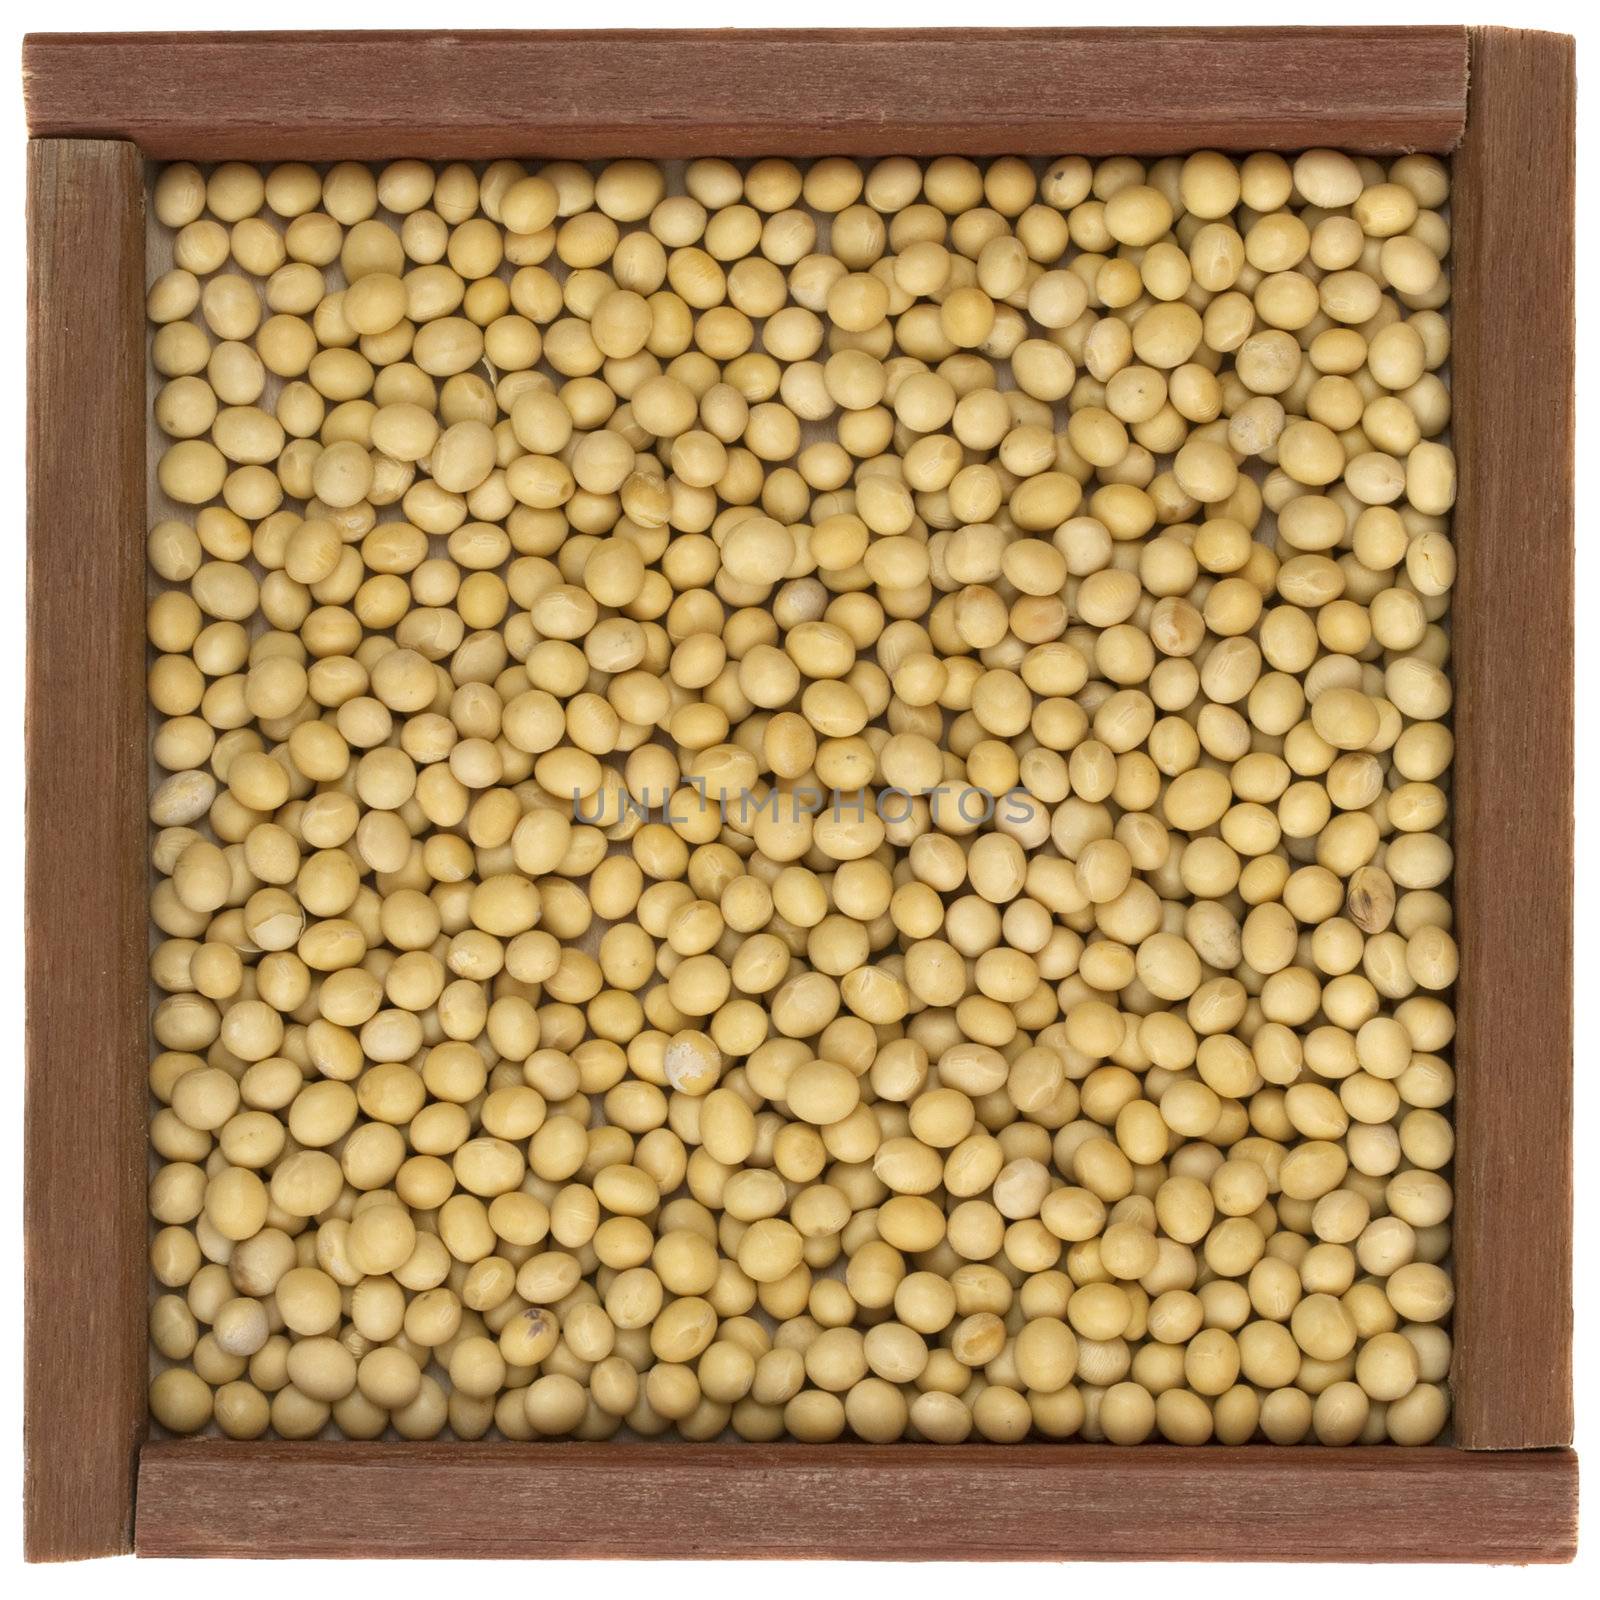 yellow soy beans by PixelsAway